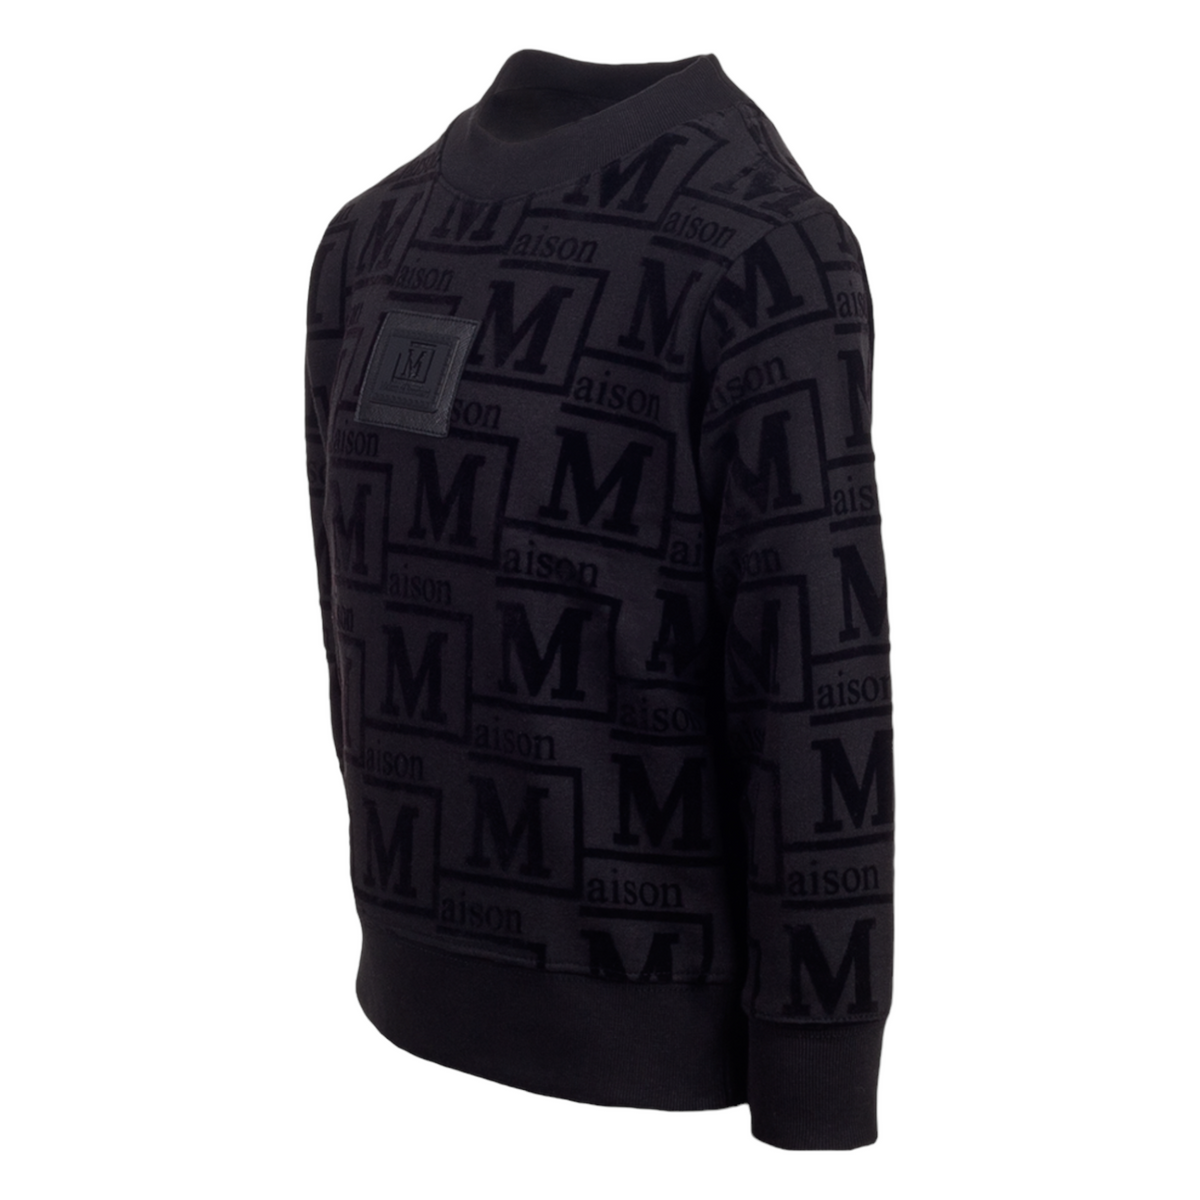 MDB Couture Kid's Monogram Crewneck Sweatshirt V2